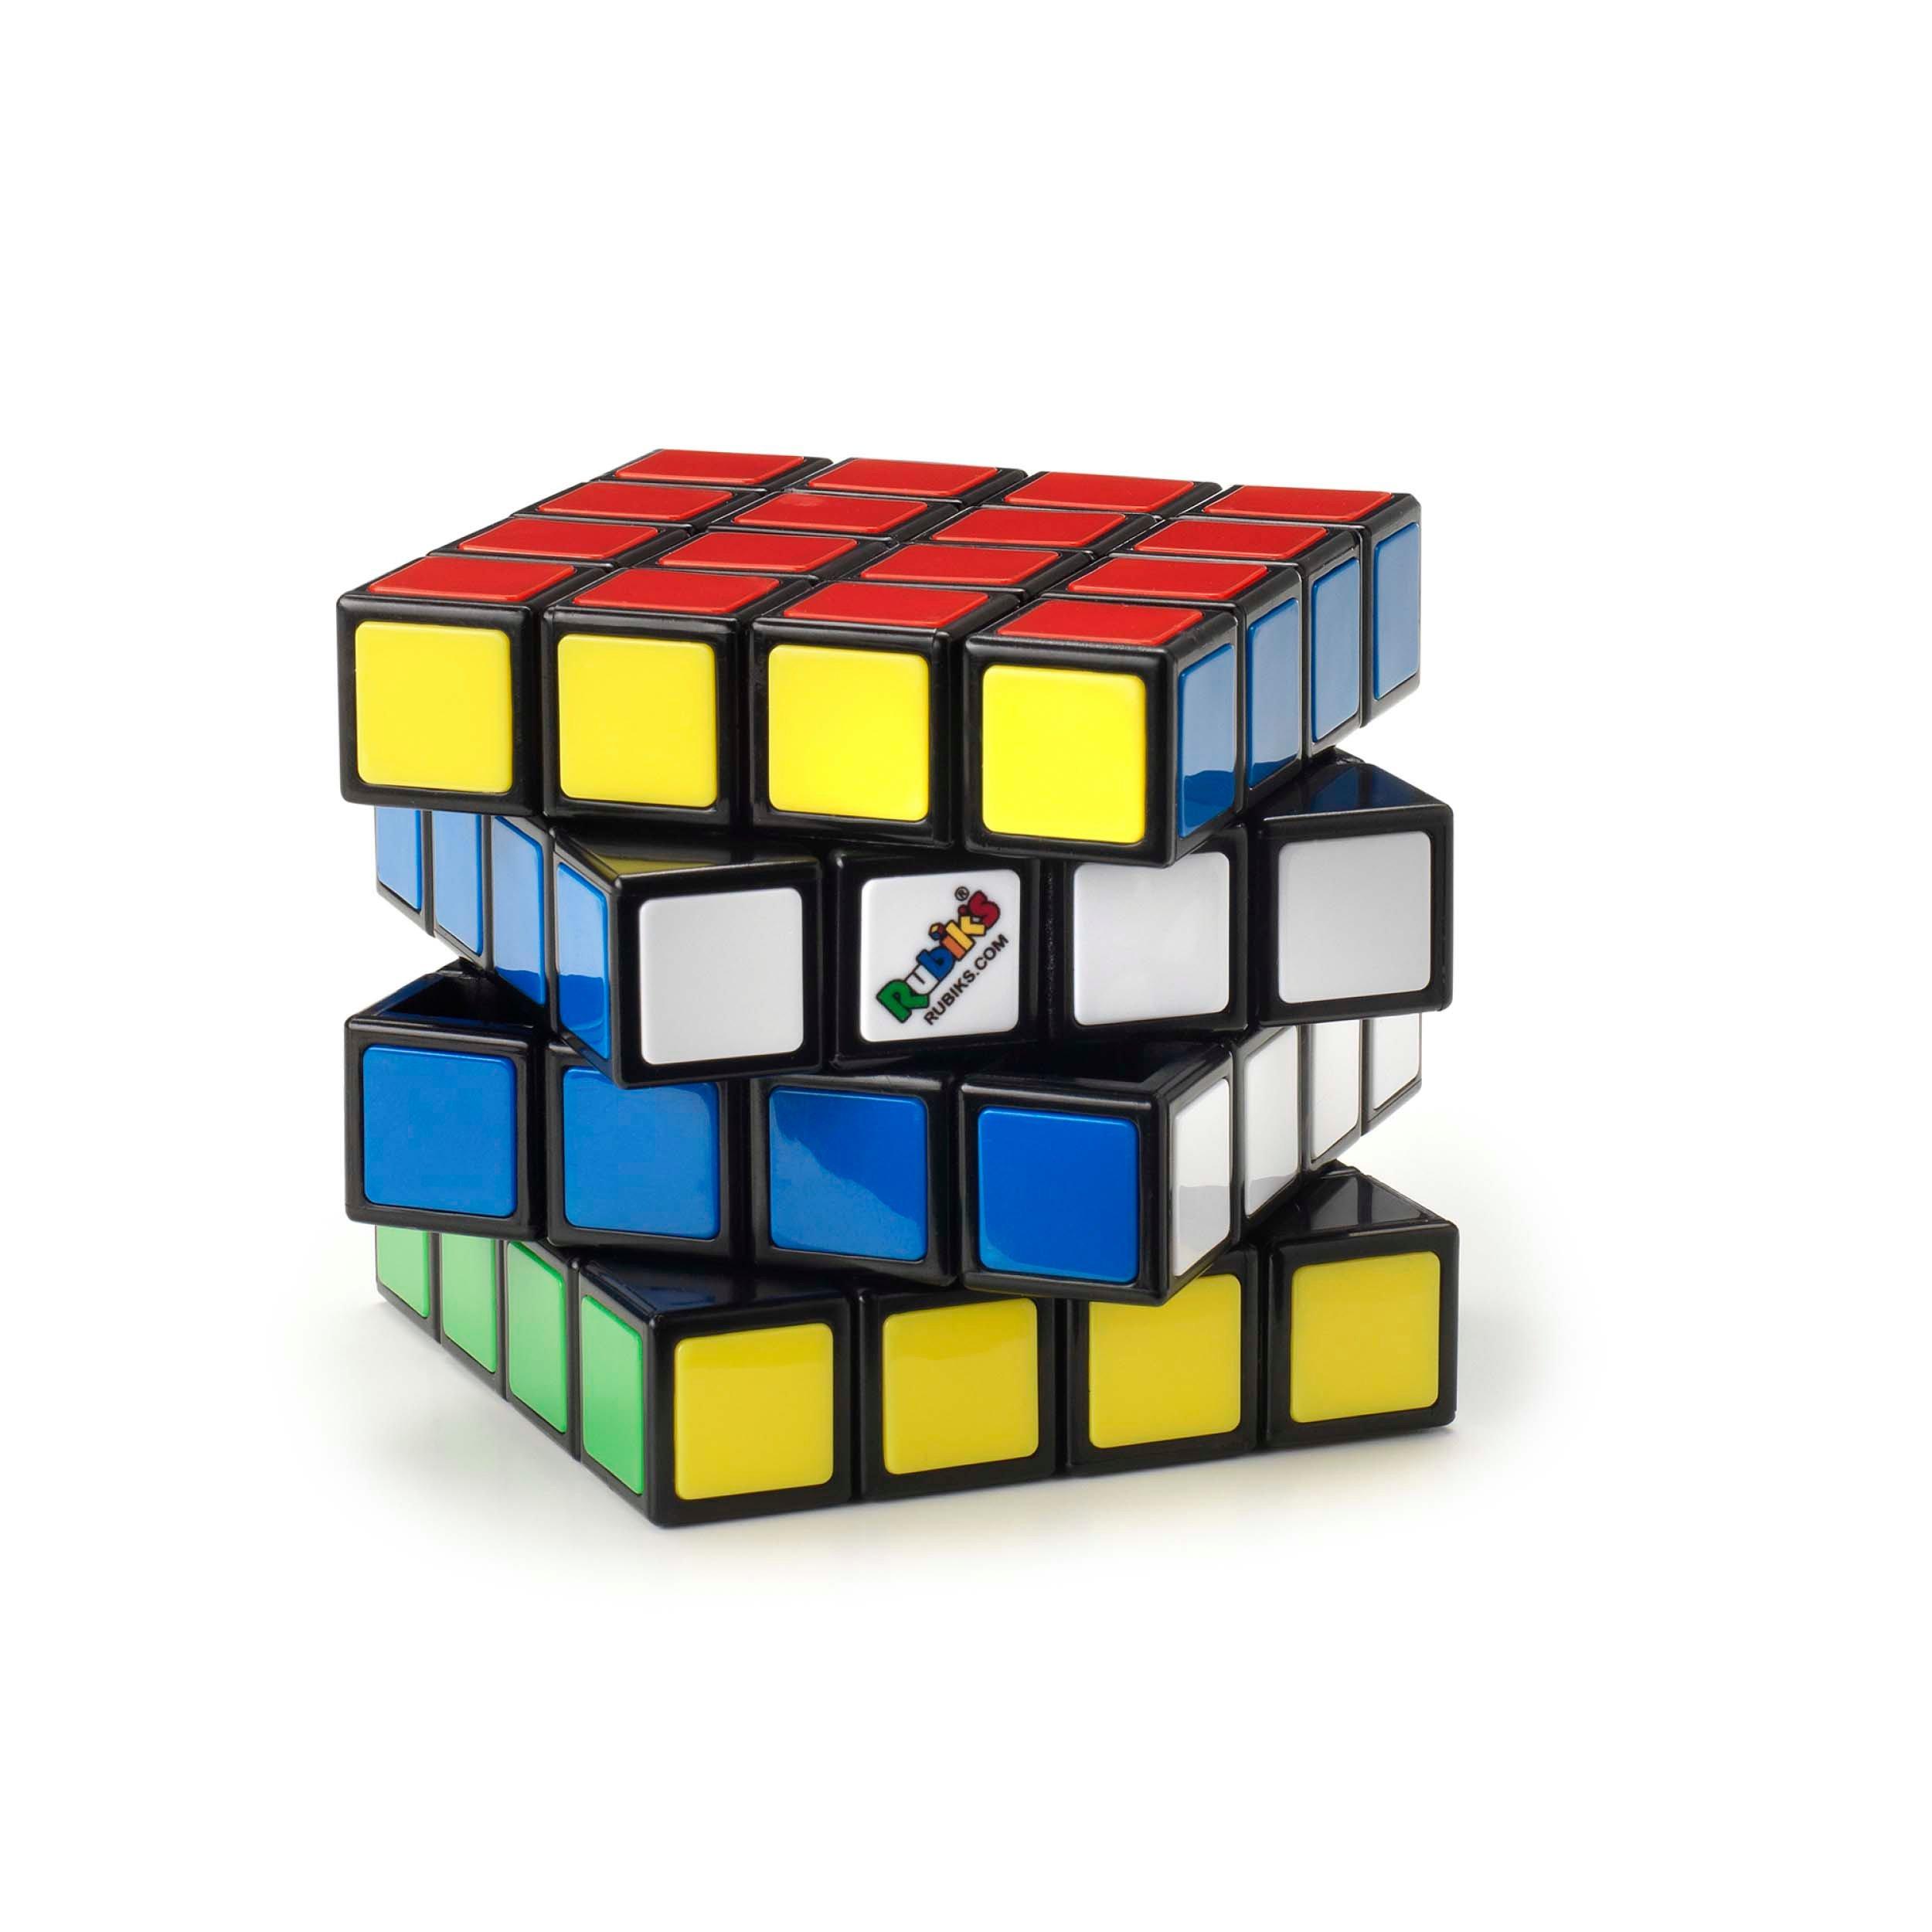 Rubiks Cube | GameStop